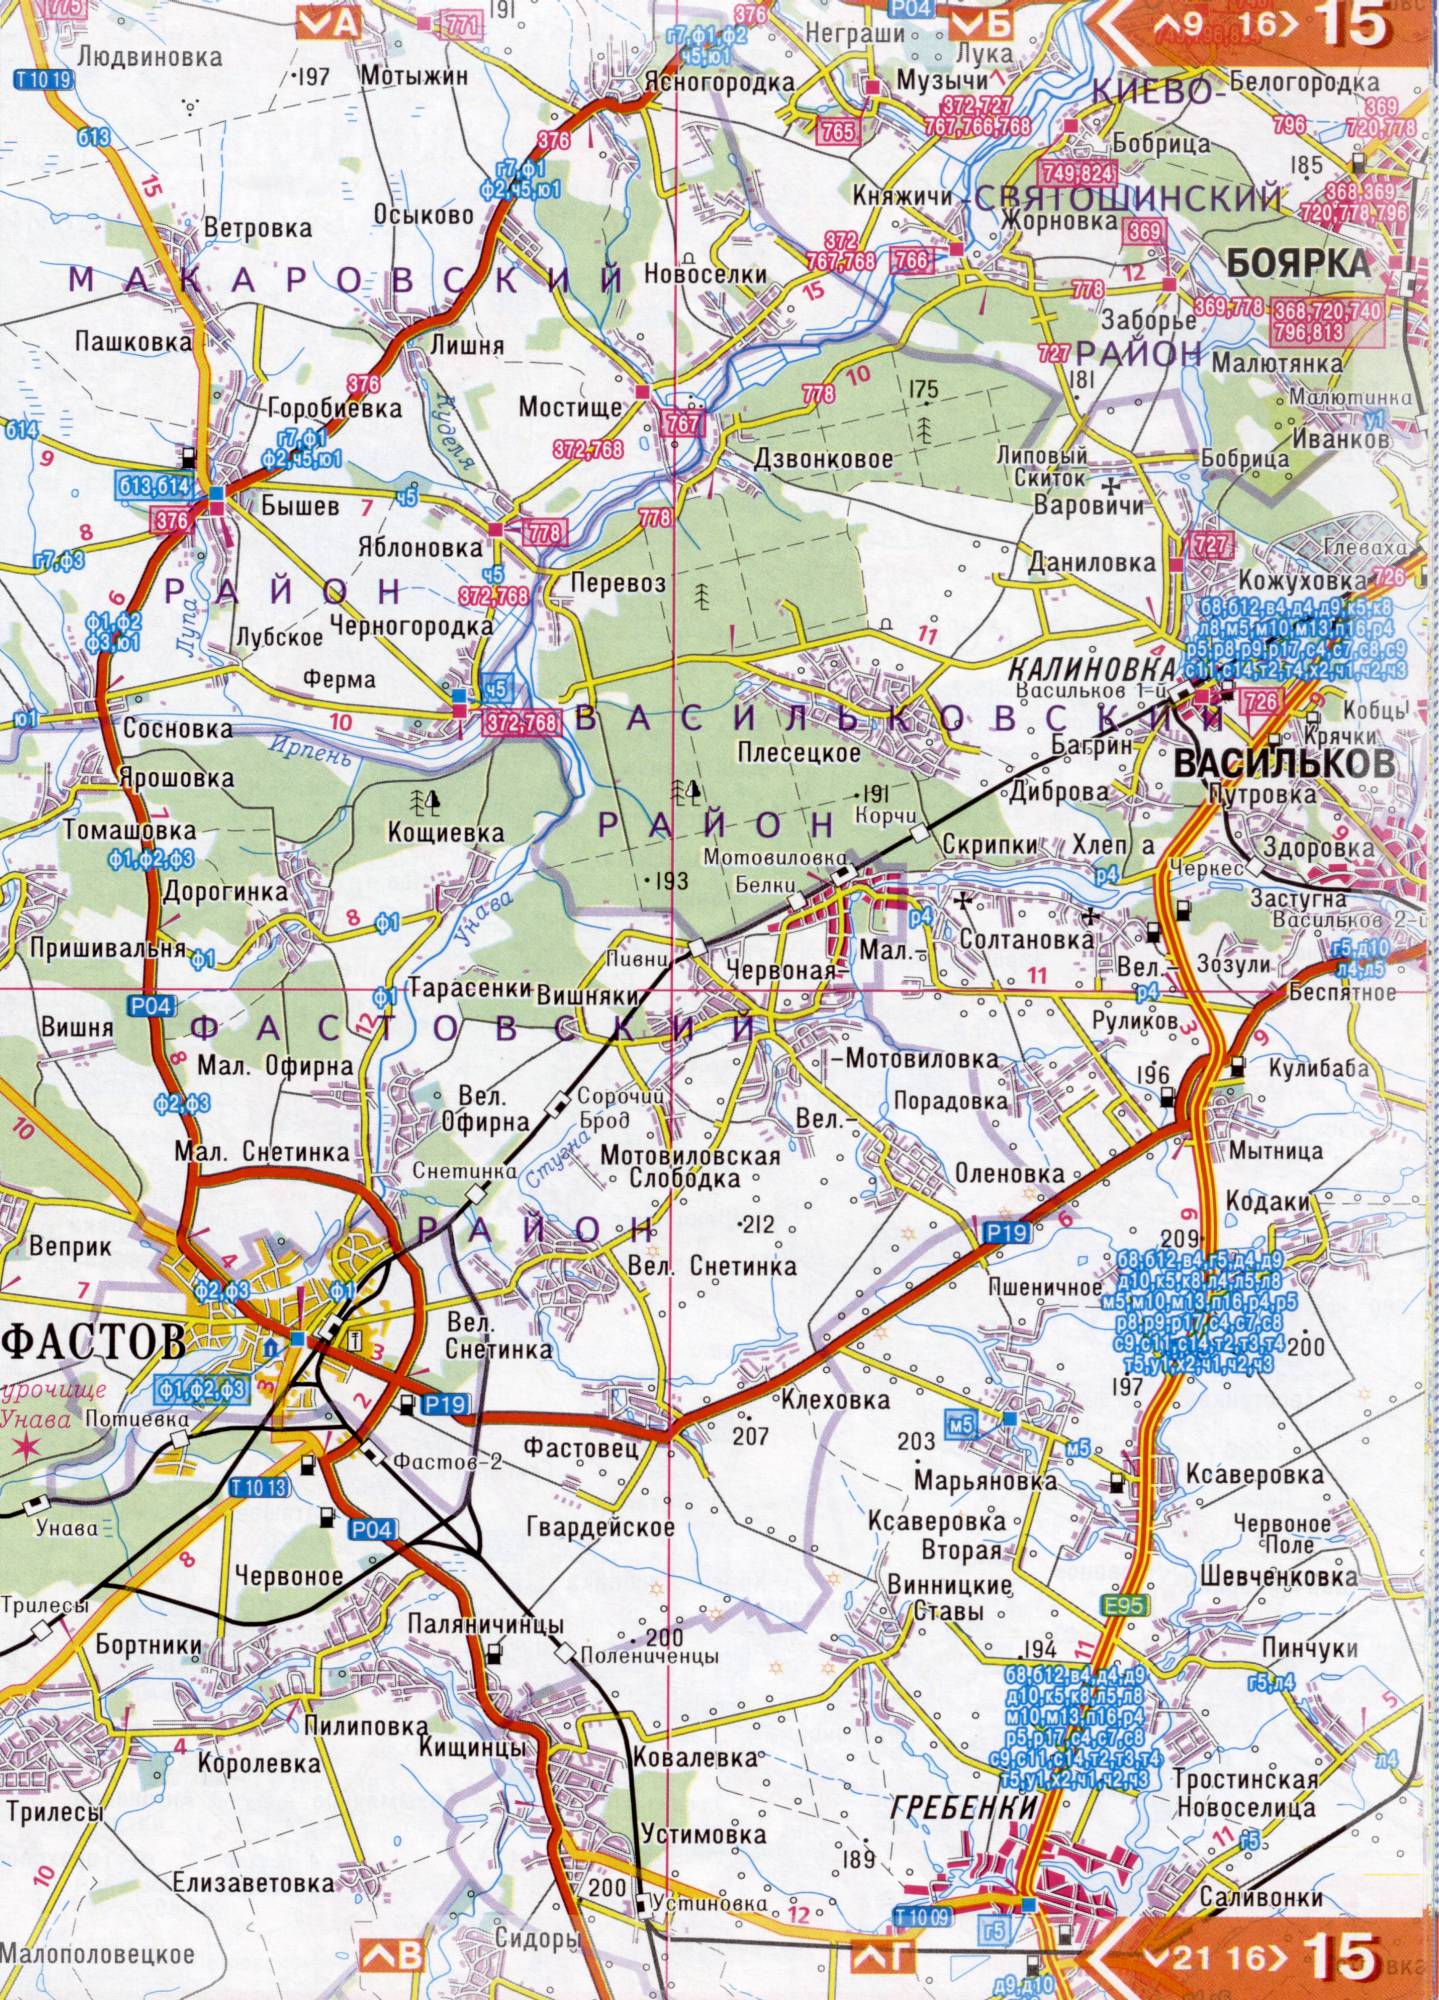 Atlas de la région de Kiev. Une carte détaillée de la région de Kiev de l'atlas des routes. région de Kiev sur une carte détaillée de 1cm échelle = 3 km. Gratuit, B3 - Fastow